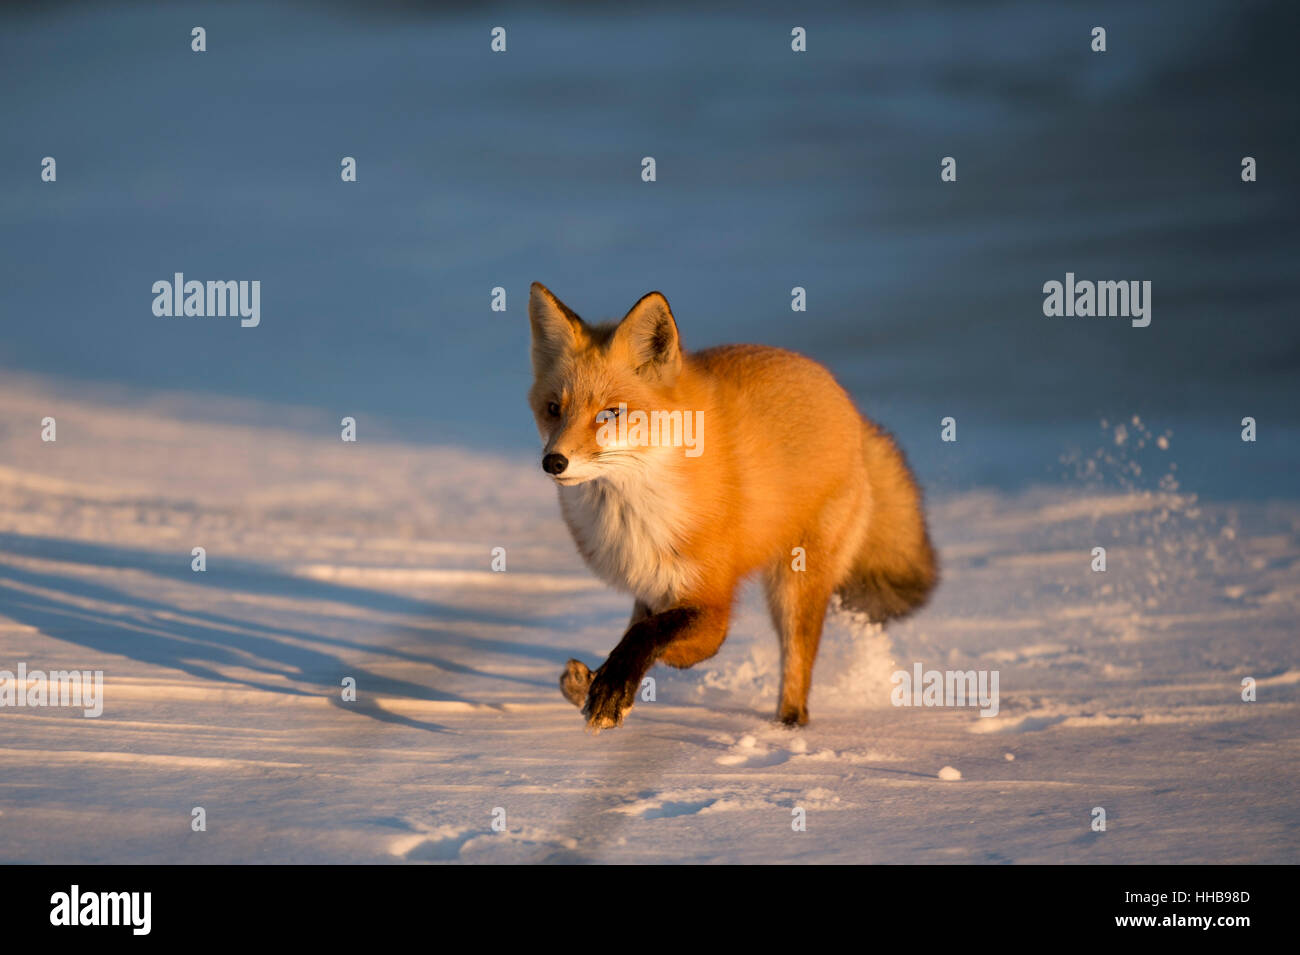 A Red Fox runs through the snow as the setting sun shines on its orange fur. Stock Photo